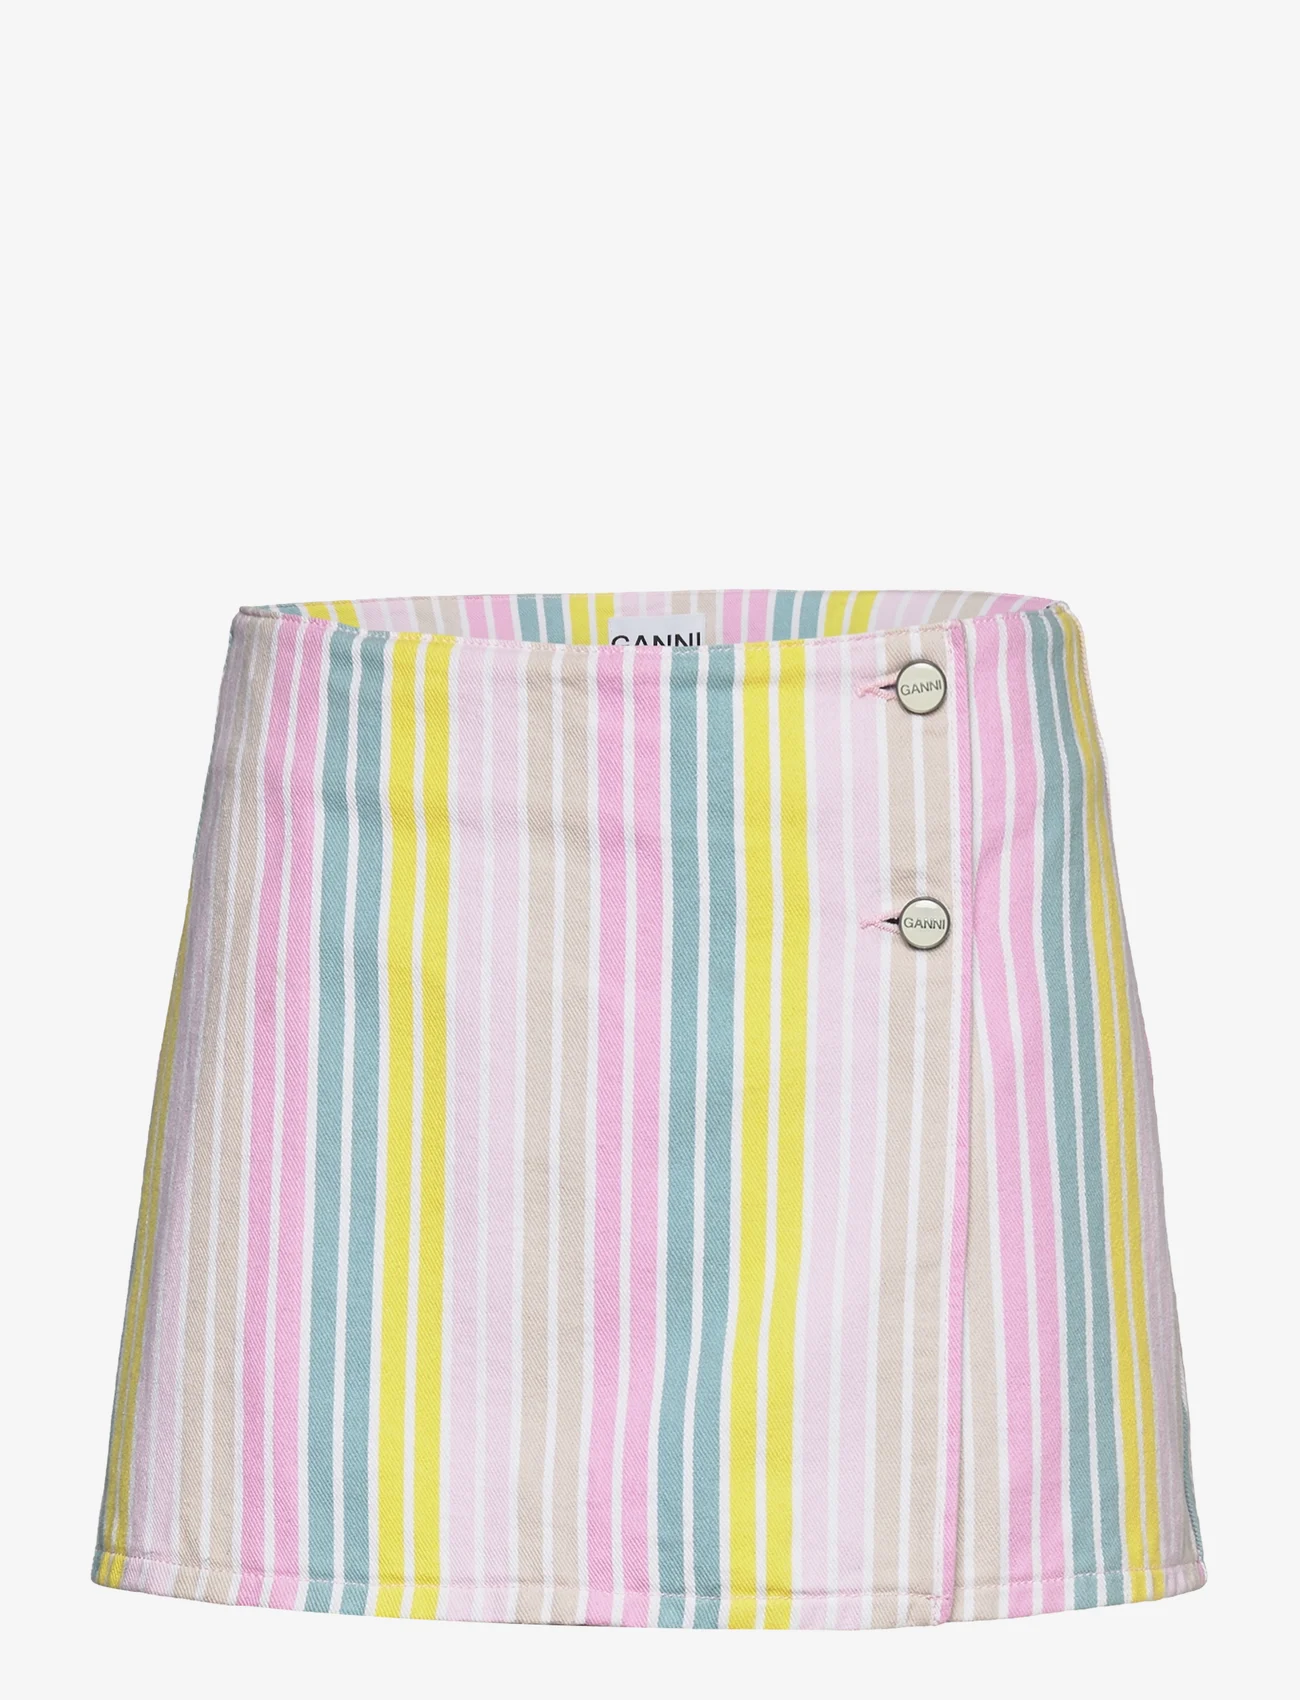 Ganni - Stripe Denim - short skirts - multicolour - 0